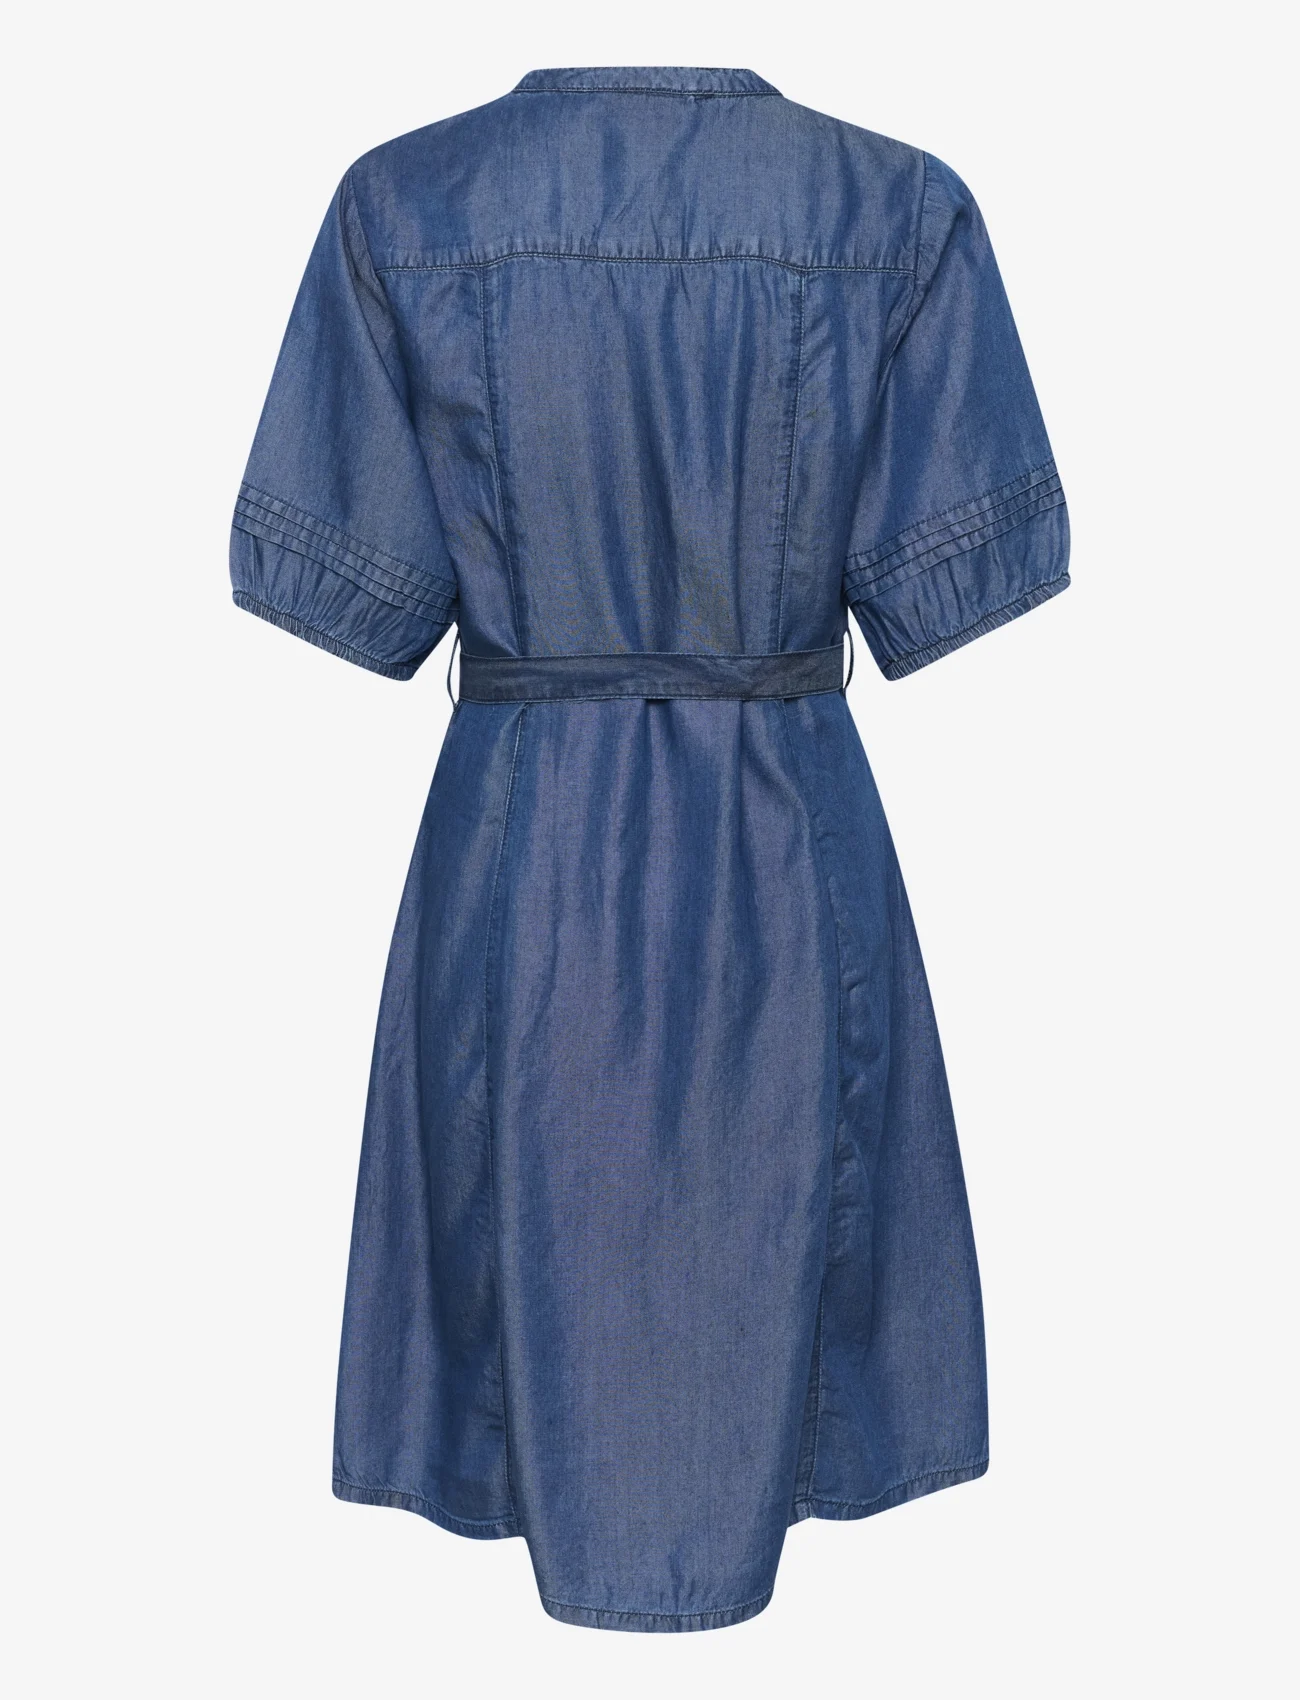 Cream - CRMolly Dress - Zally Fit - shirt dresses - light blue denim - 1